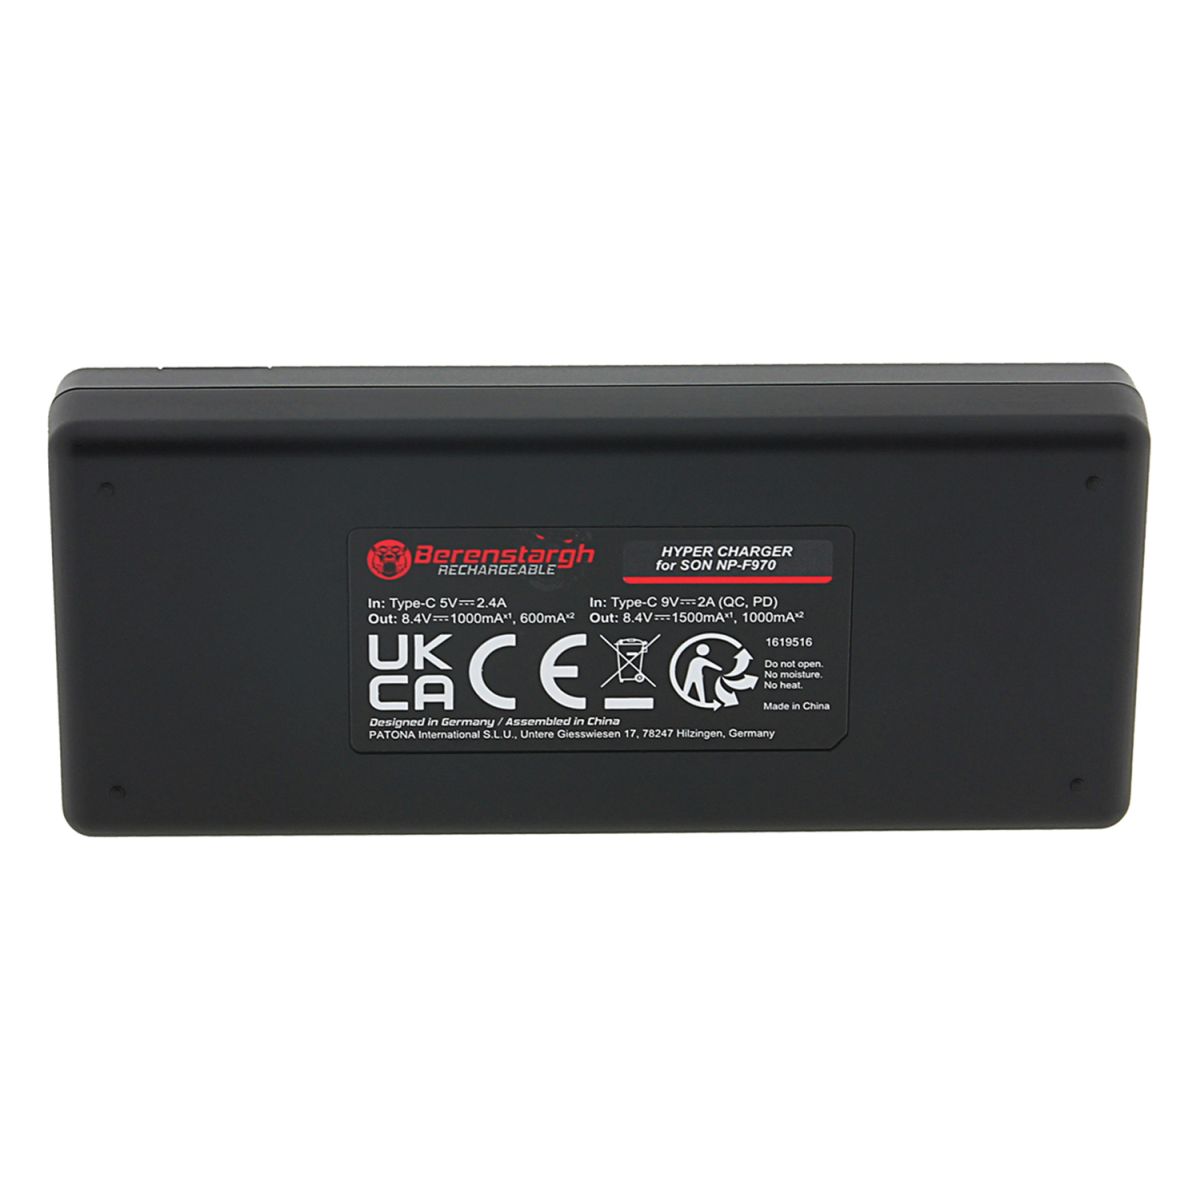 Berenstargh Hyper PD Ladegerät für Sony F550 F750 F970 FM50 FM500H inkl. USB-C Kabel